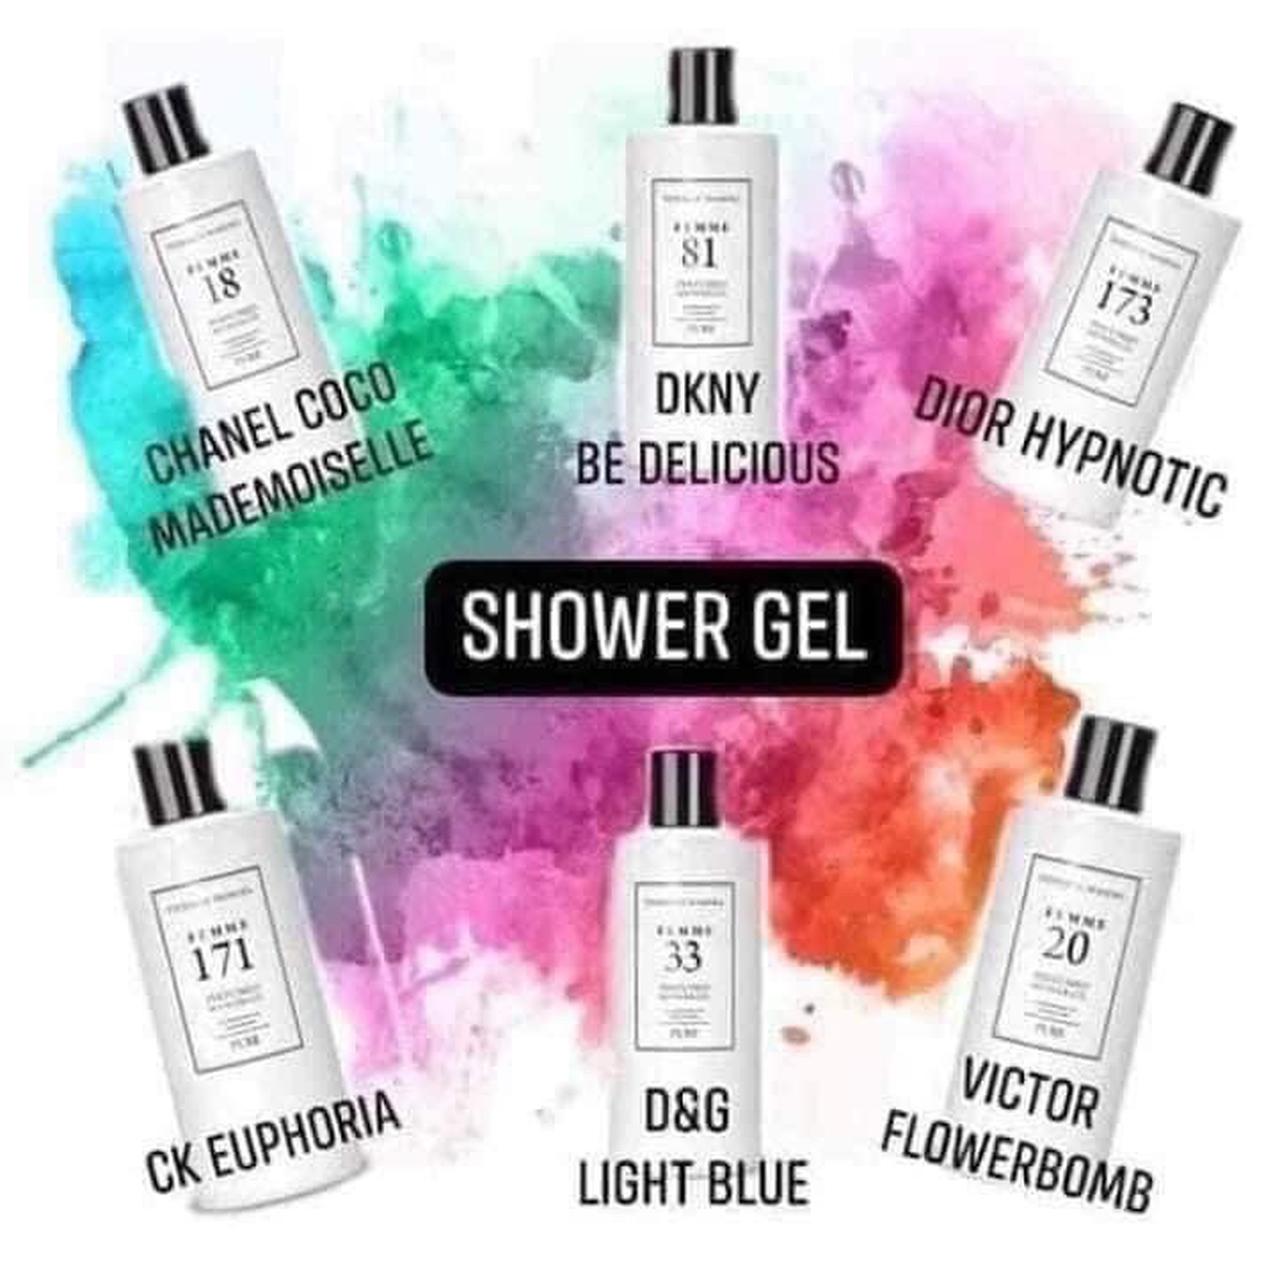 Did you know FM World do perfume shower gel! OMG